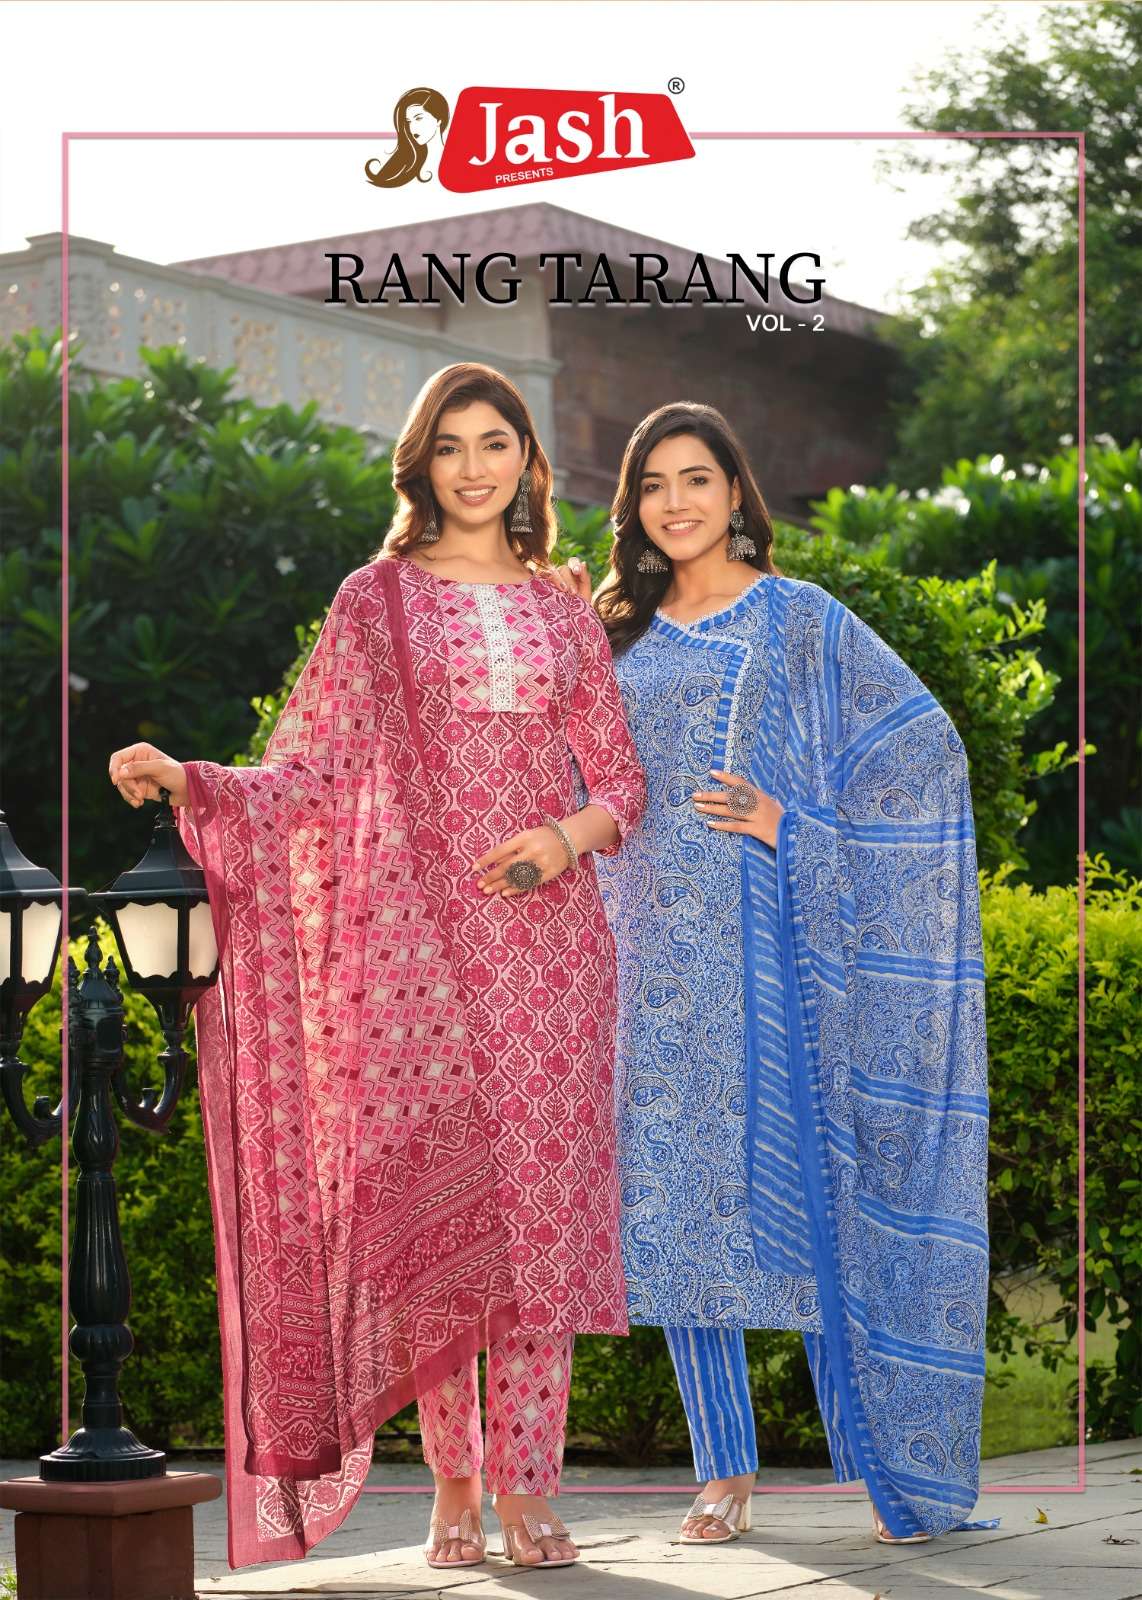 product/Rang Tarang vol-2_01.jpeg